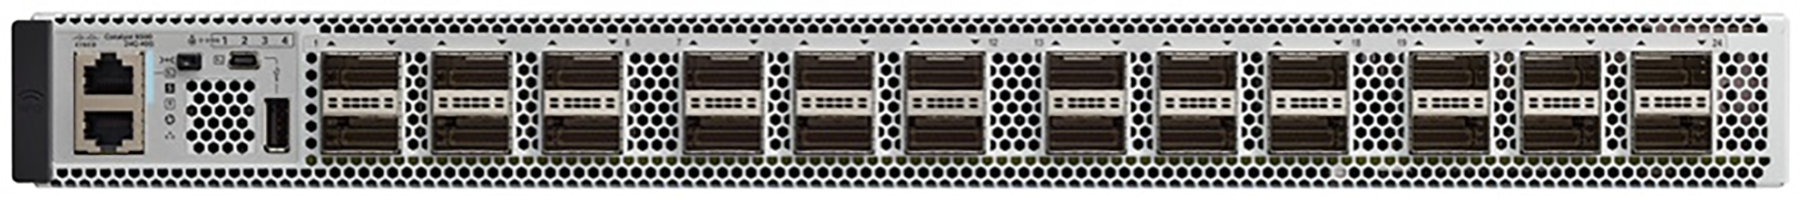 C9500-12Q: Cisco Catalyst 9500 Series switch with 12x 40G Gigabit Ethernet